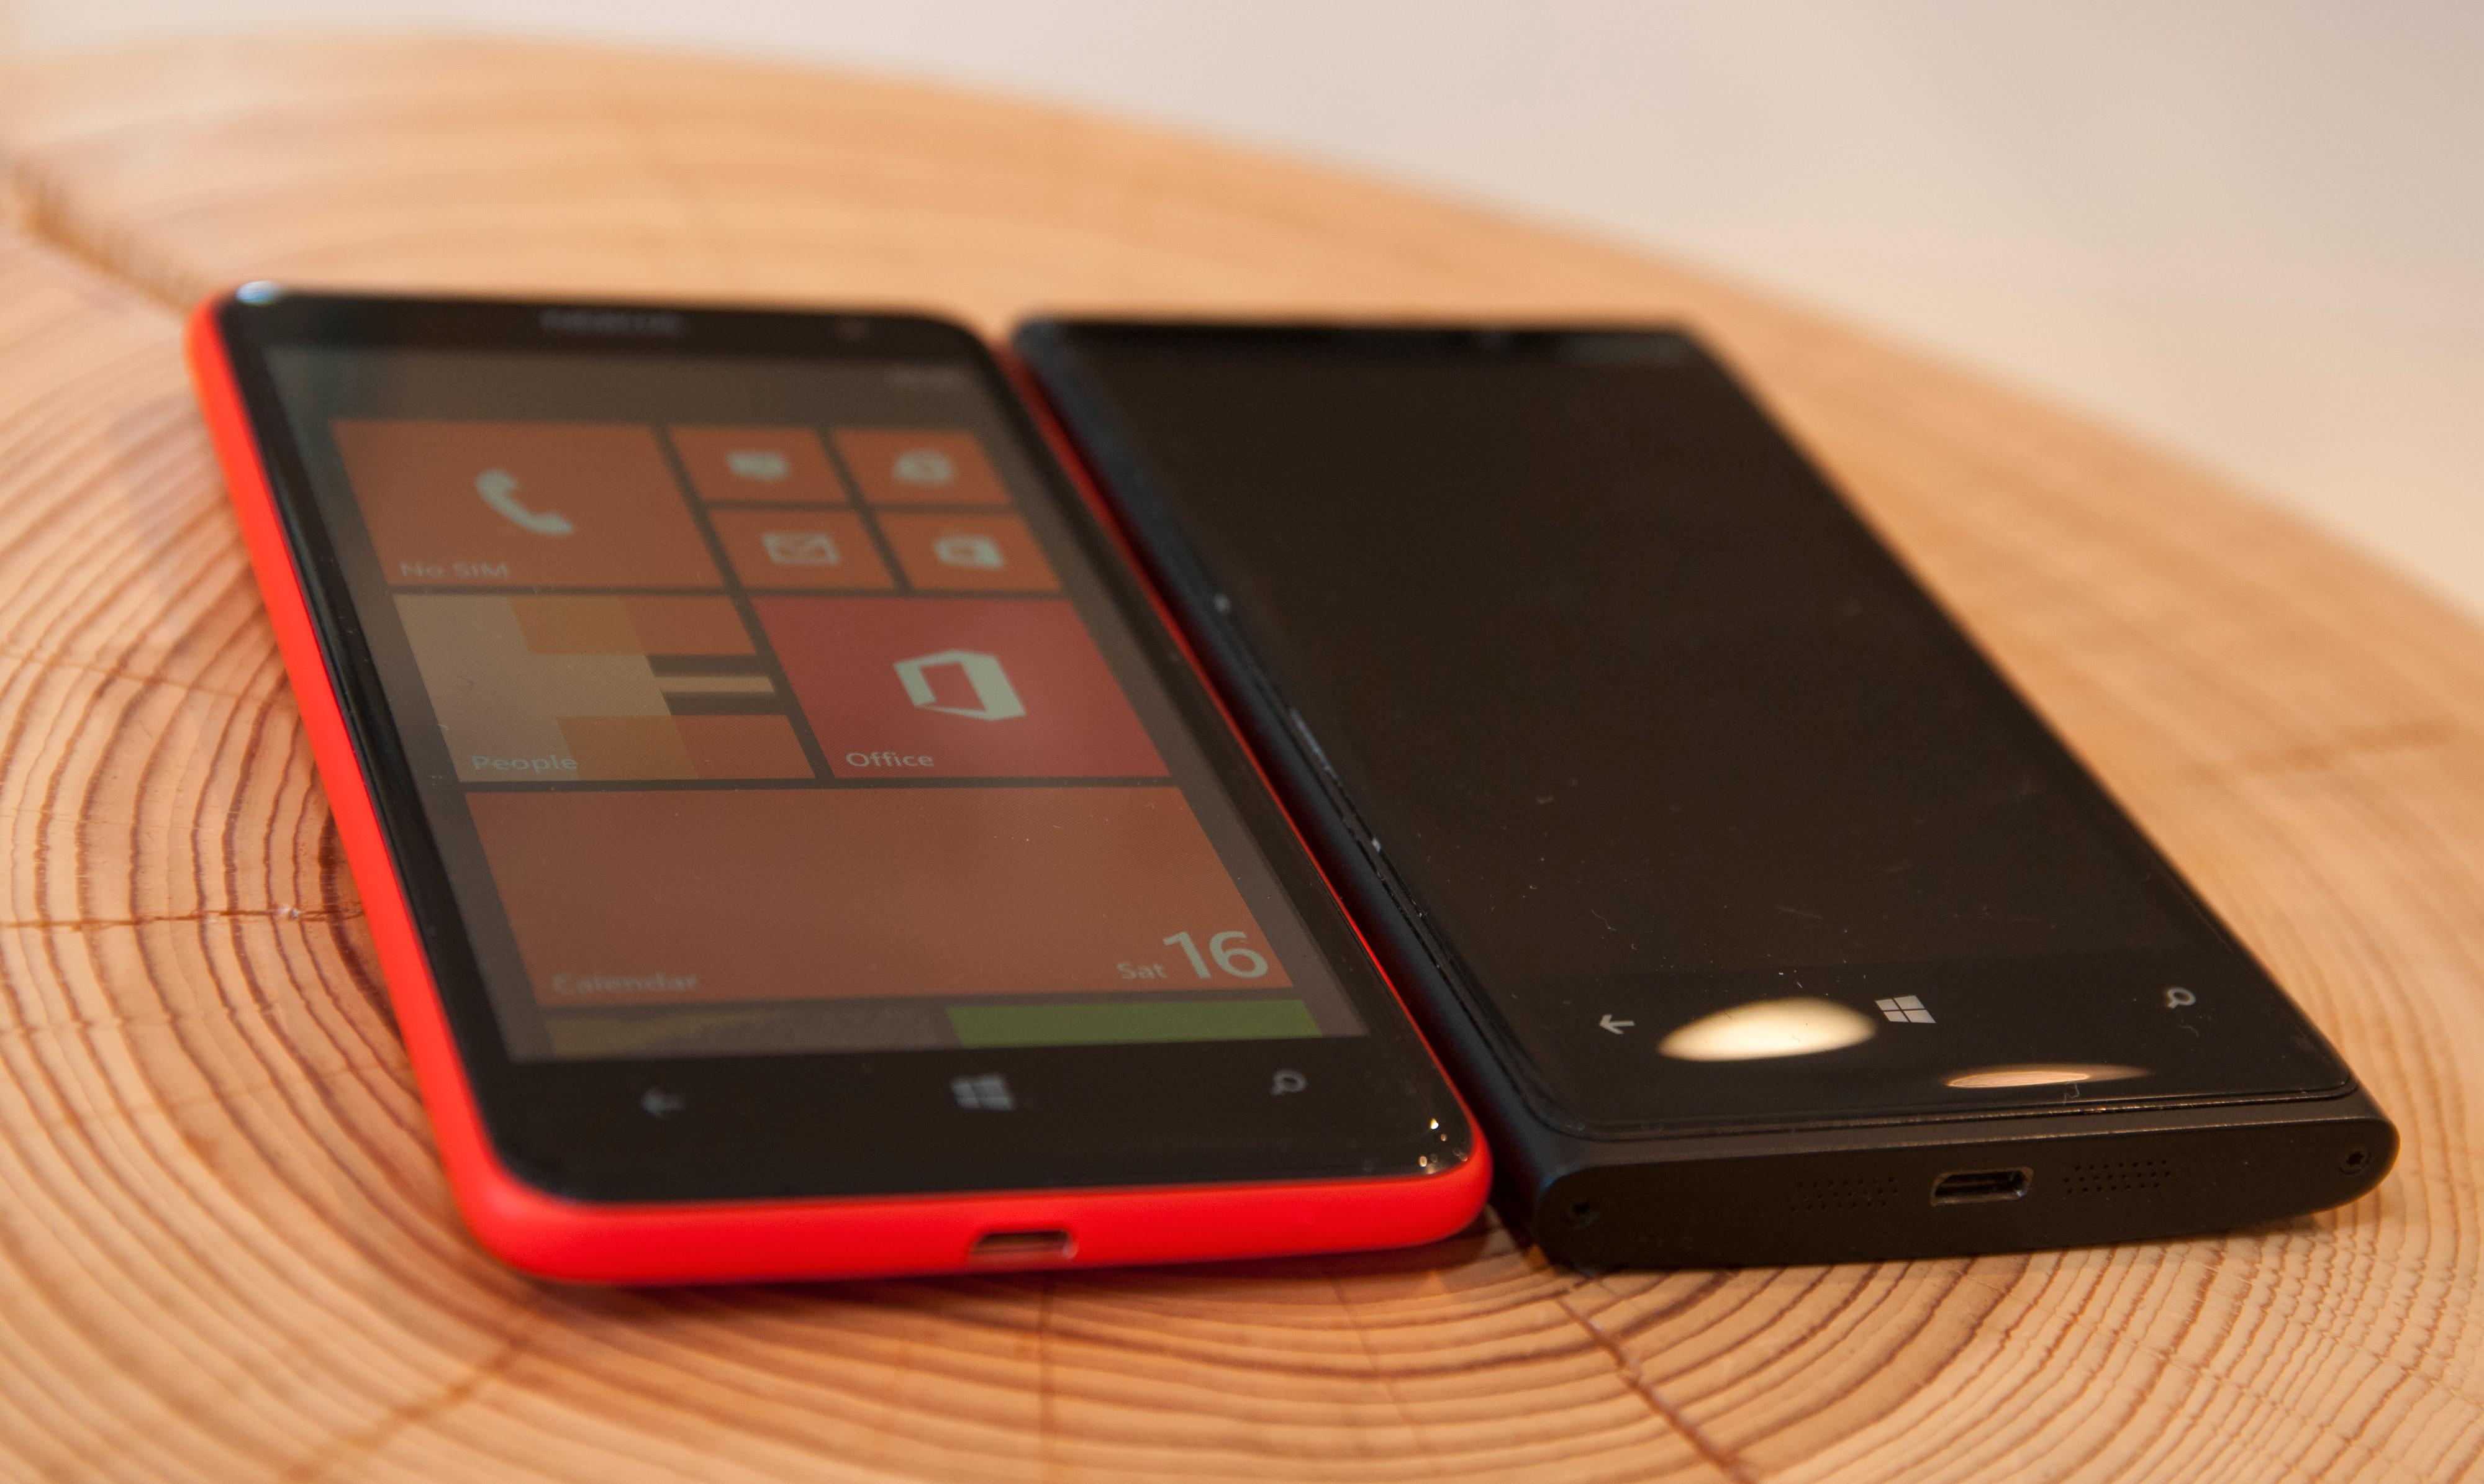 Nokia Lumia 625 ved siden av Lumia 920. Lumia 920 har 4,5 tommers skjerm.Foto: Finn Jarle Kvalheim, Amobil.no